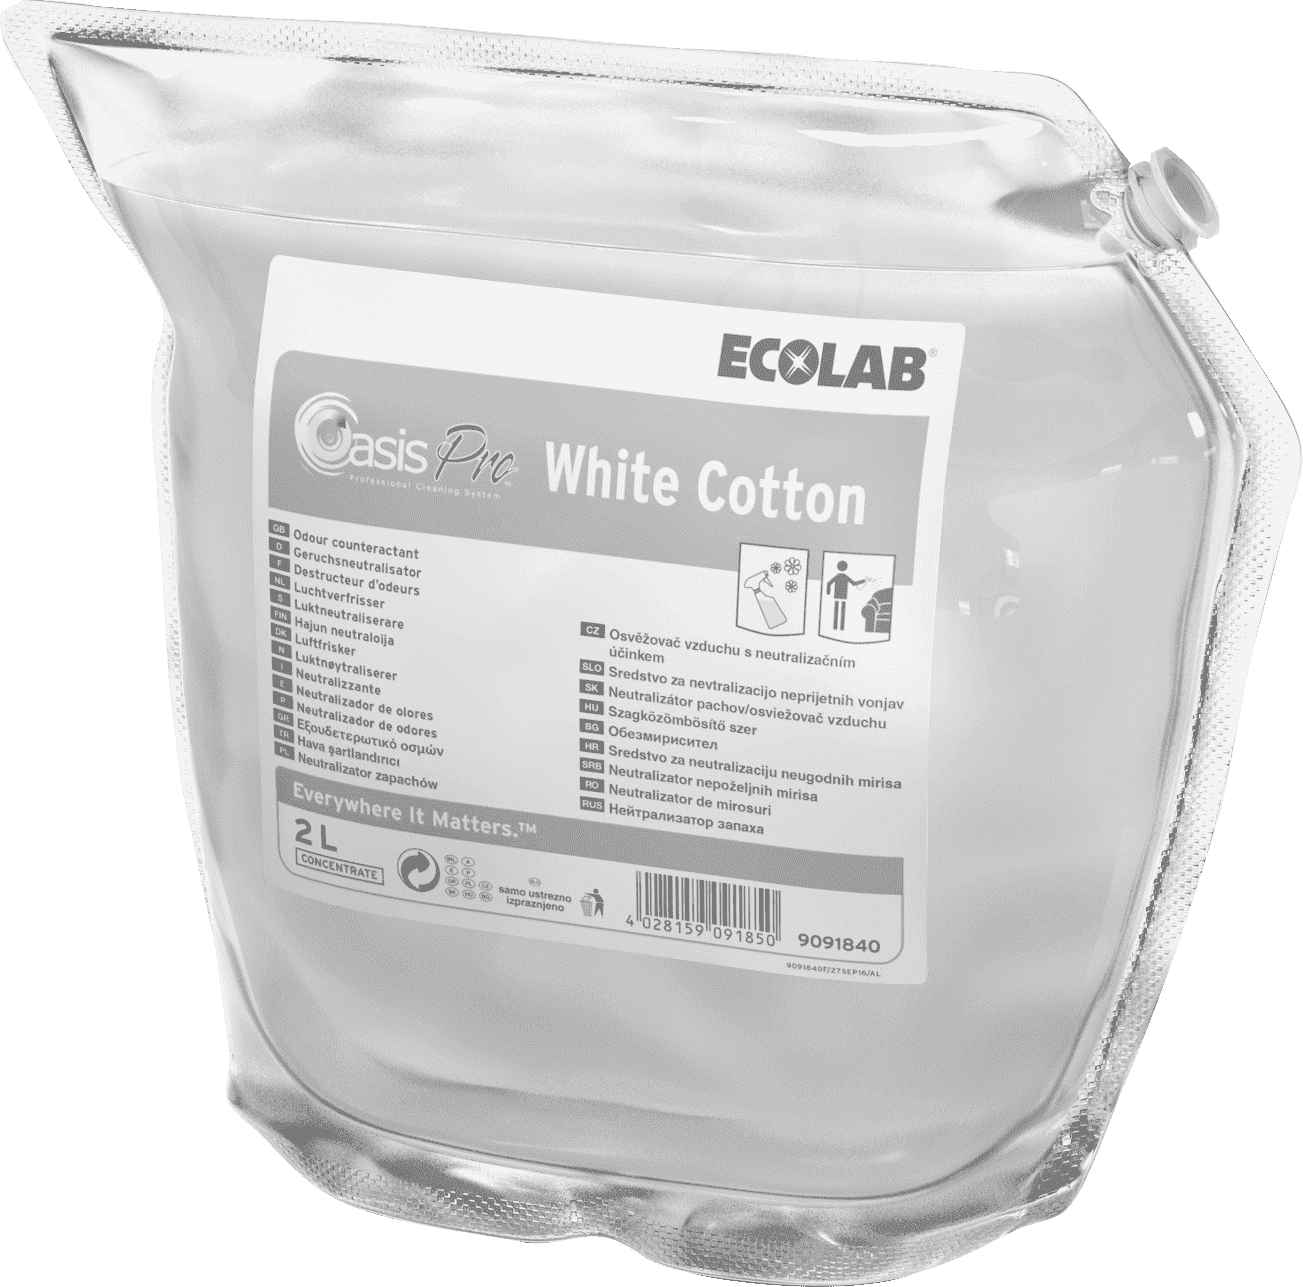 Oasis Pro White Cotton  средство для дезодорации помещений, Клингард  0